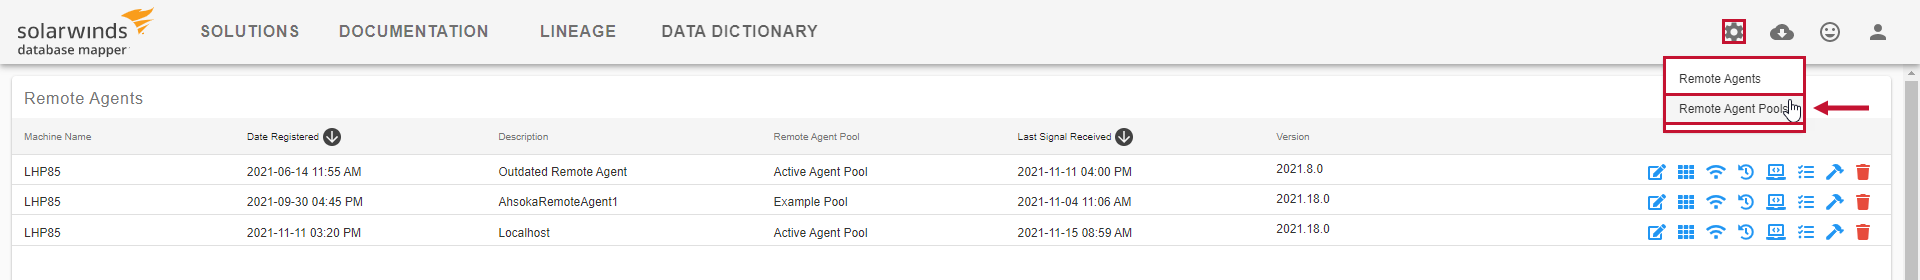 Database Mapper Web Portal Manage > Remote Agent Pools